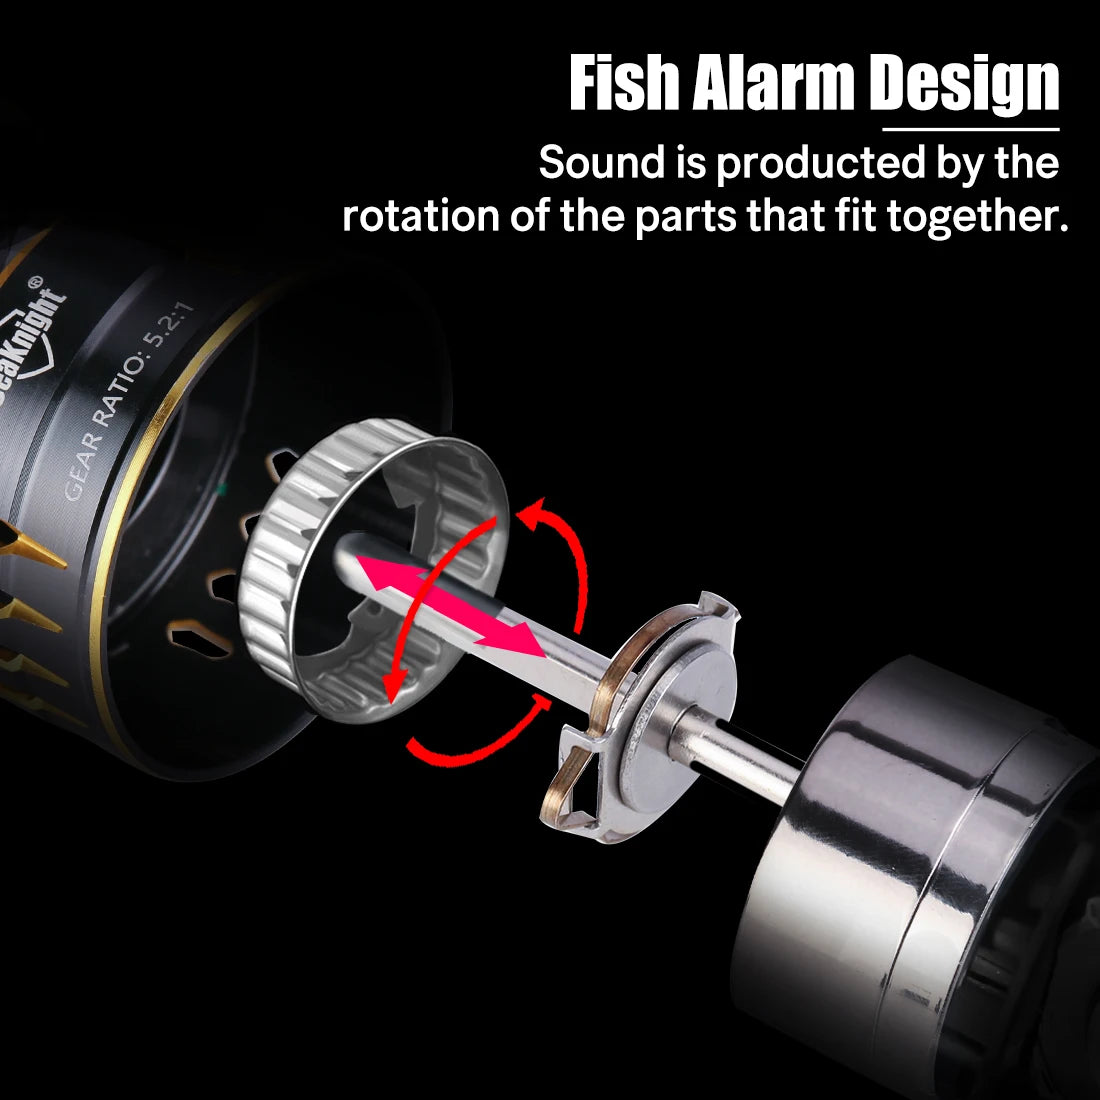 SeaKnight Brand ARCHER2 Series Fishing Reel 5.2:1 4.9:1 MAX Drag Power 28lbs Aluminum Spool Fish Alarm Spinning Reel 2000-6000